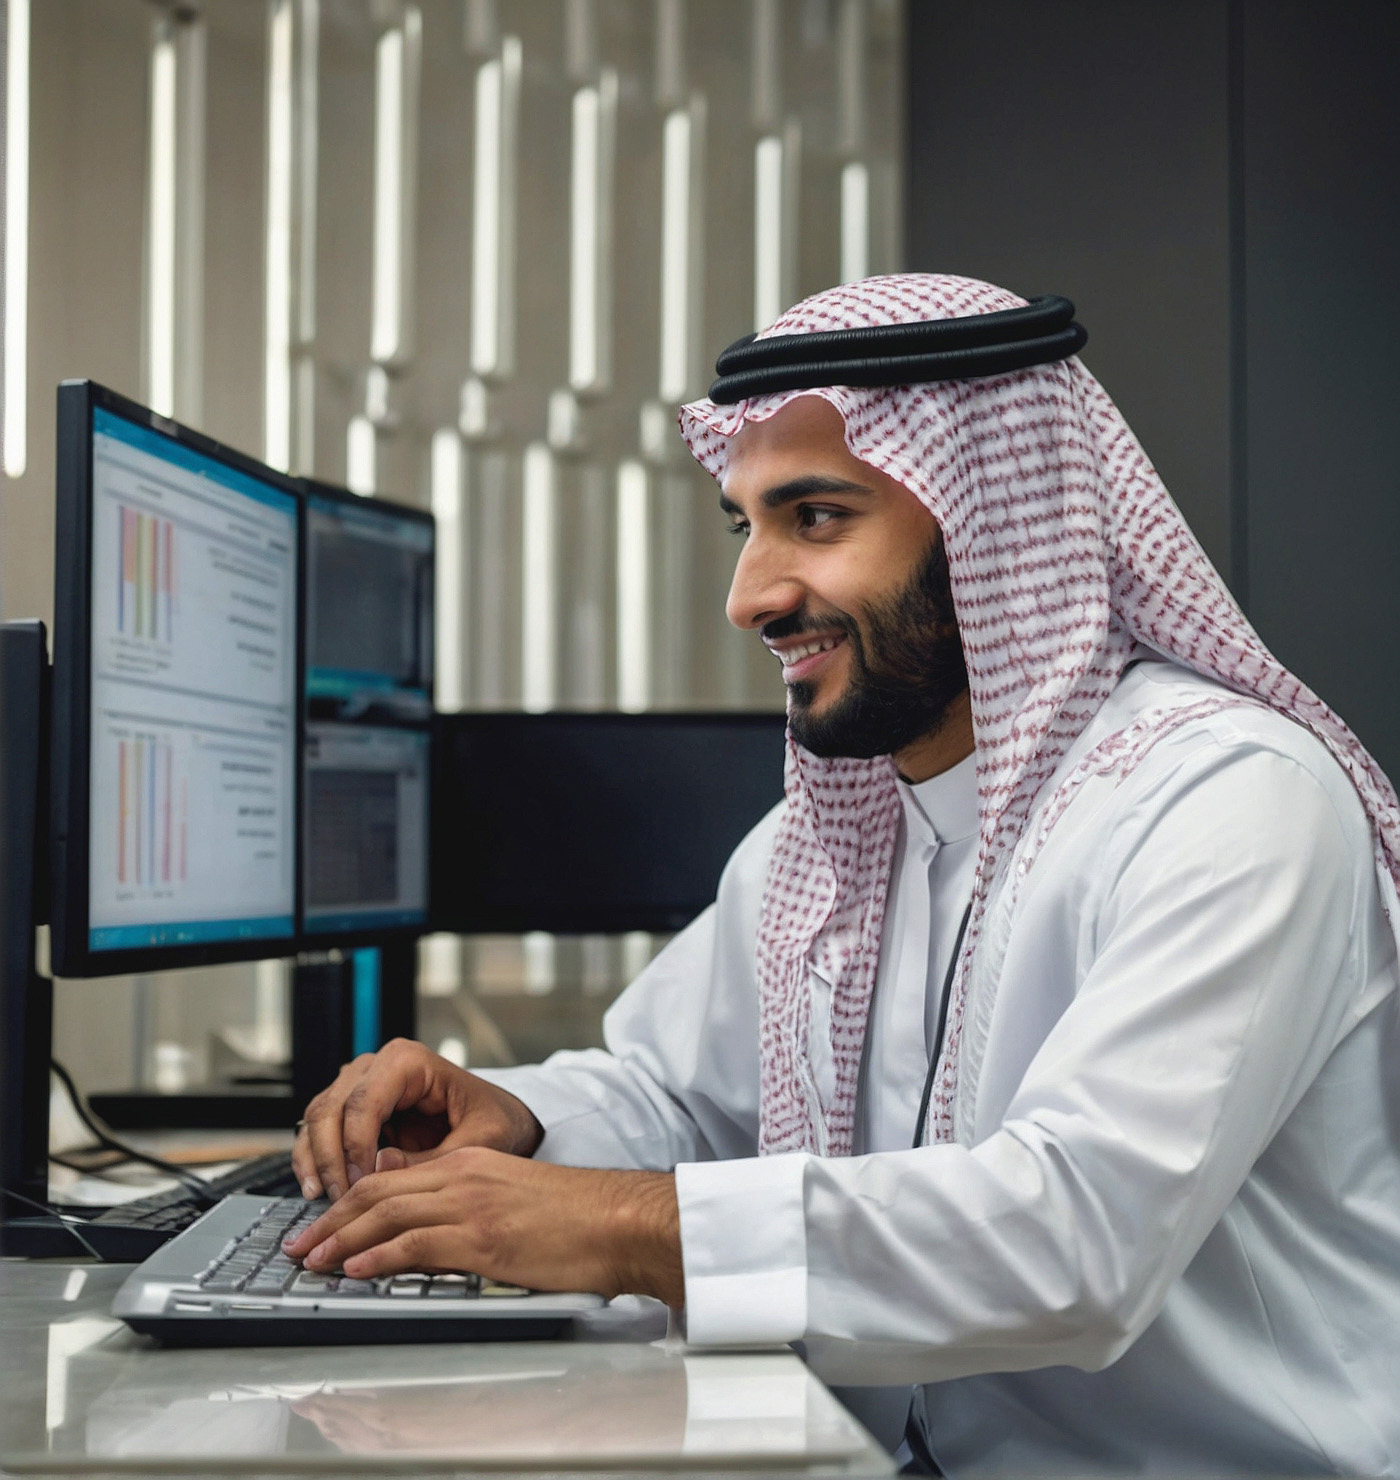 image of a male Saudi employee